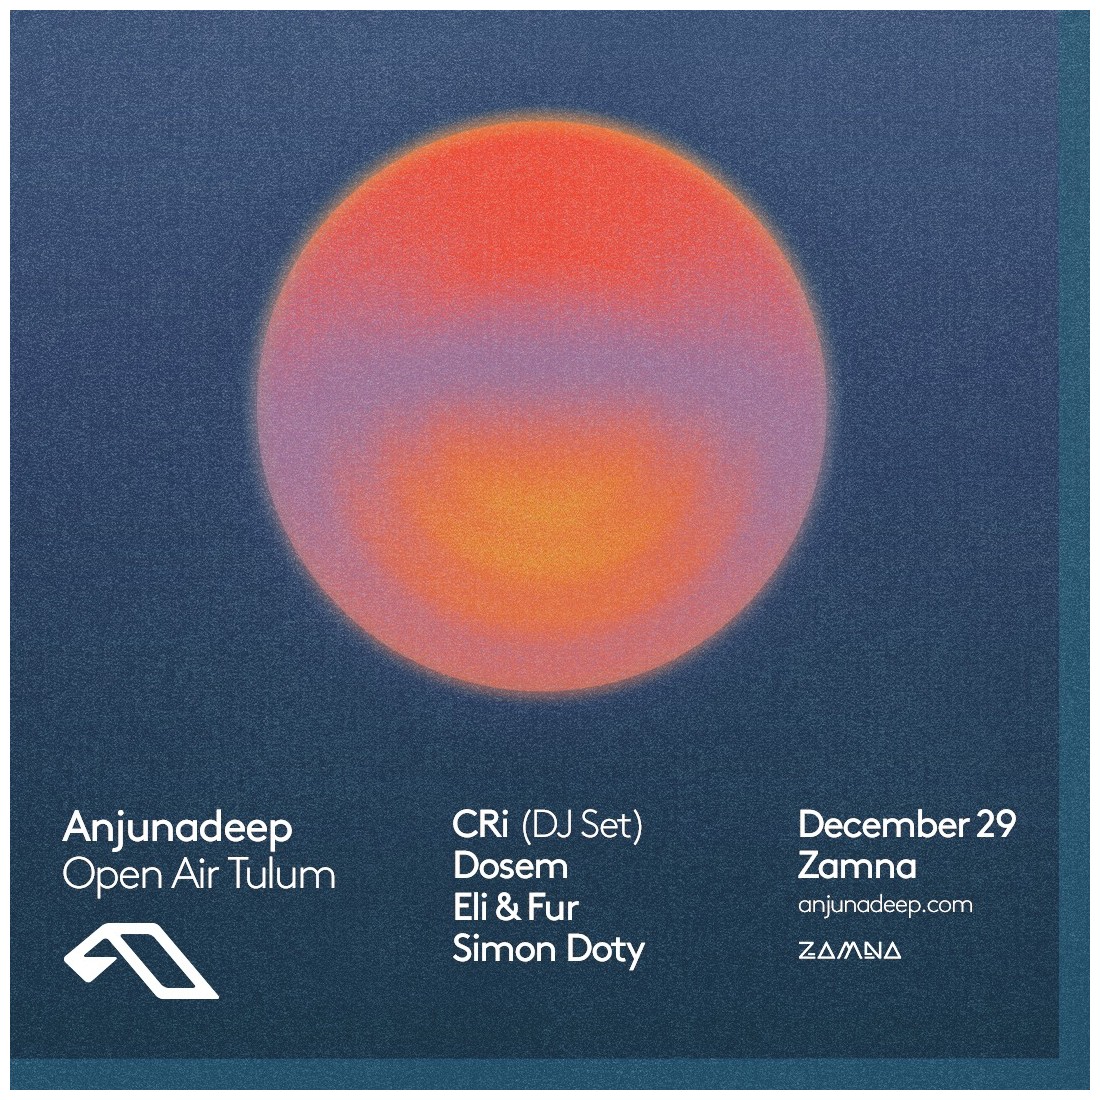 Anjunadeep Open Air Tulum Diciembre 29 - GENERAL 1° Release